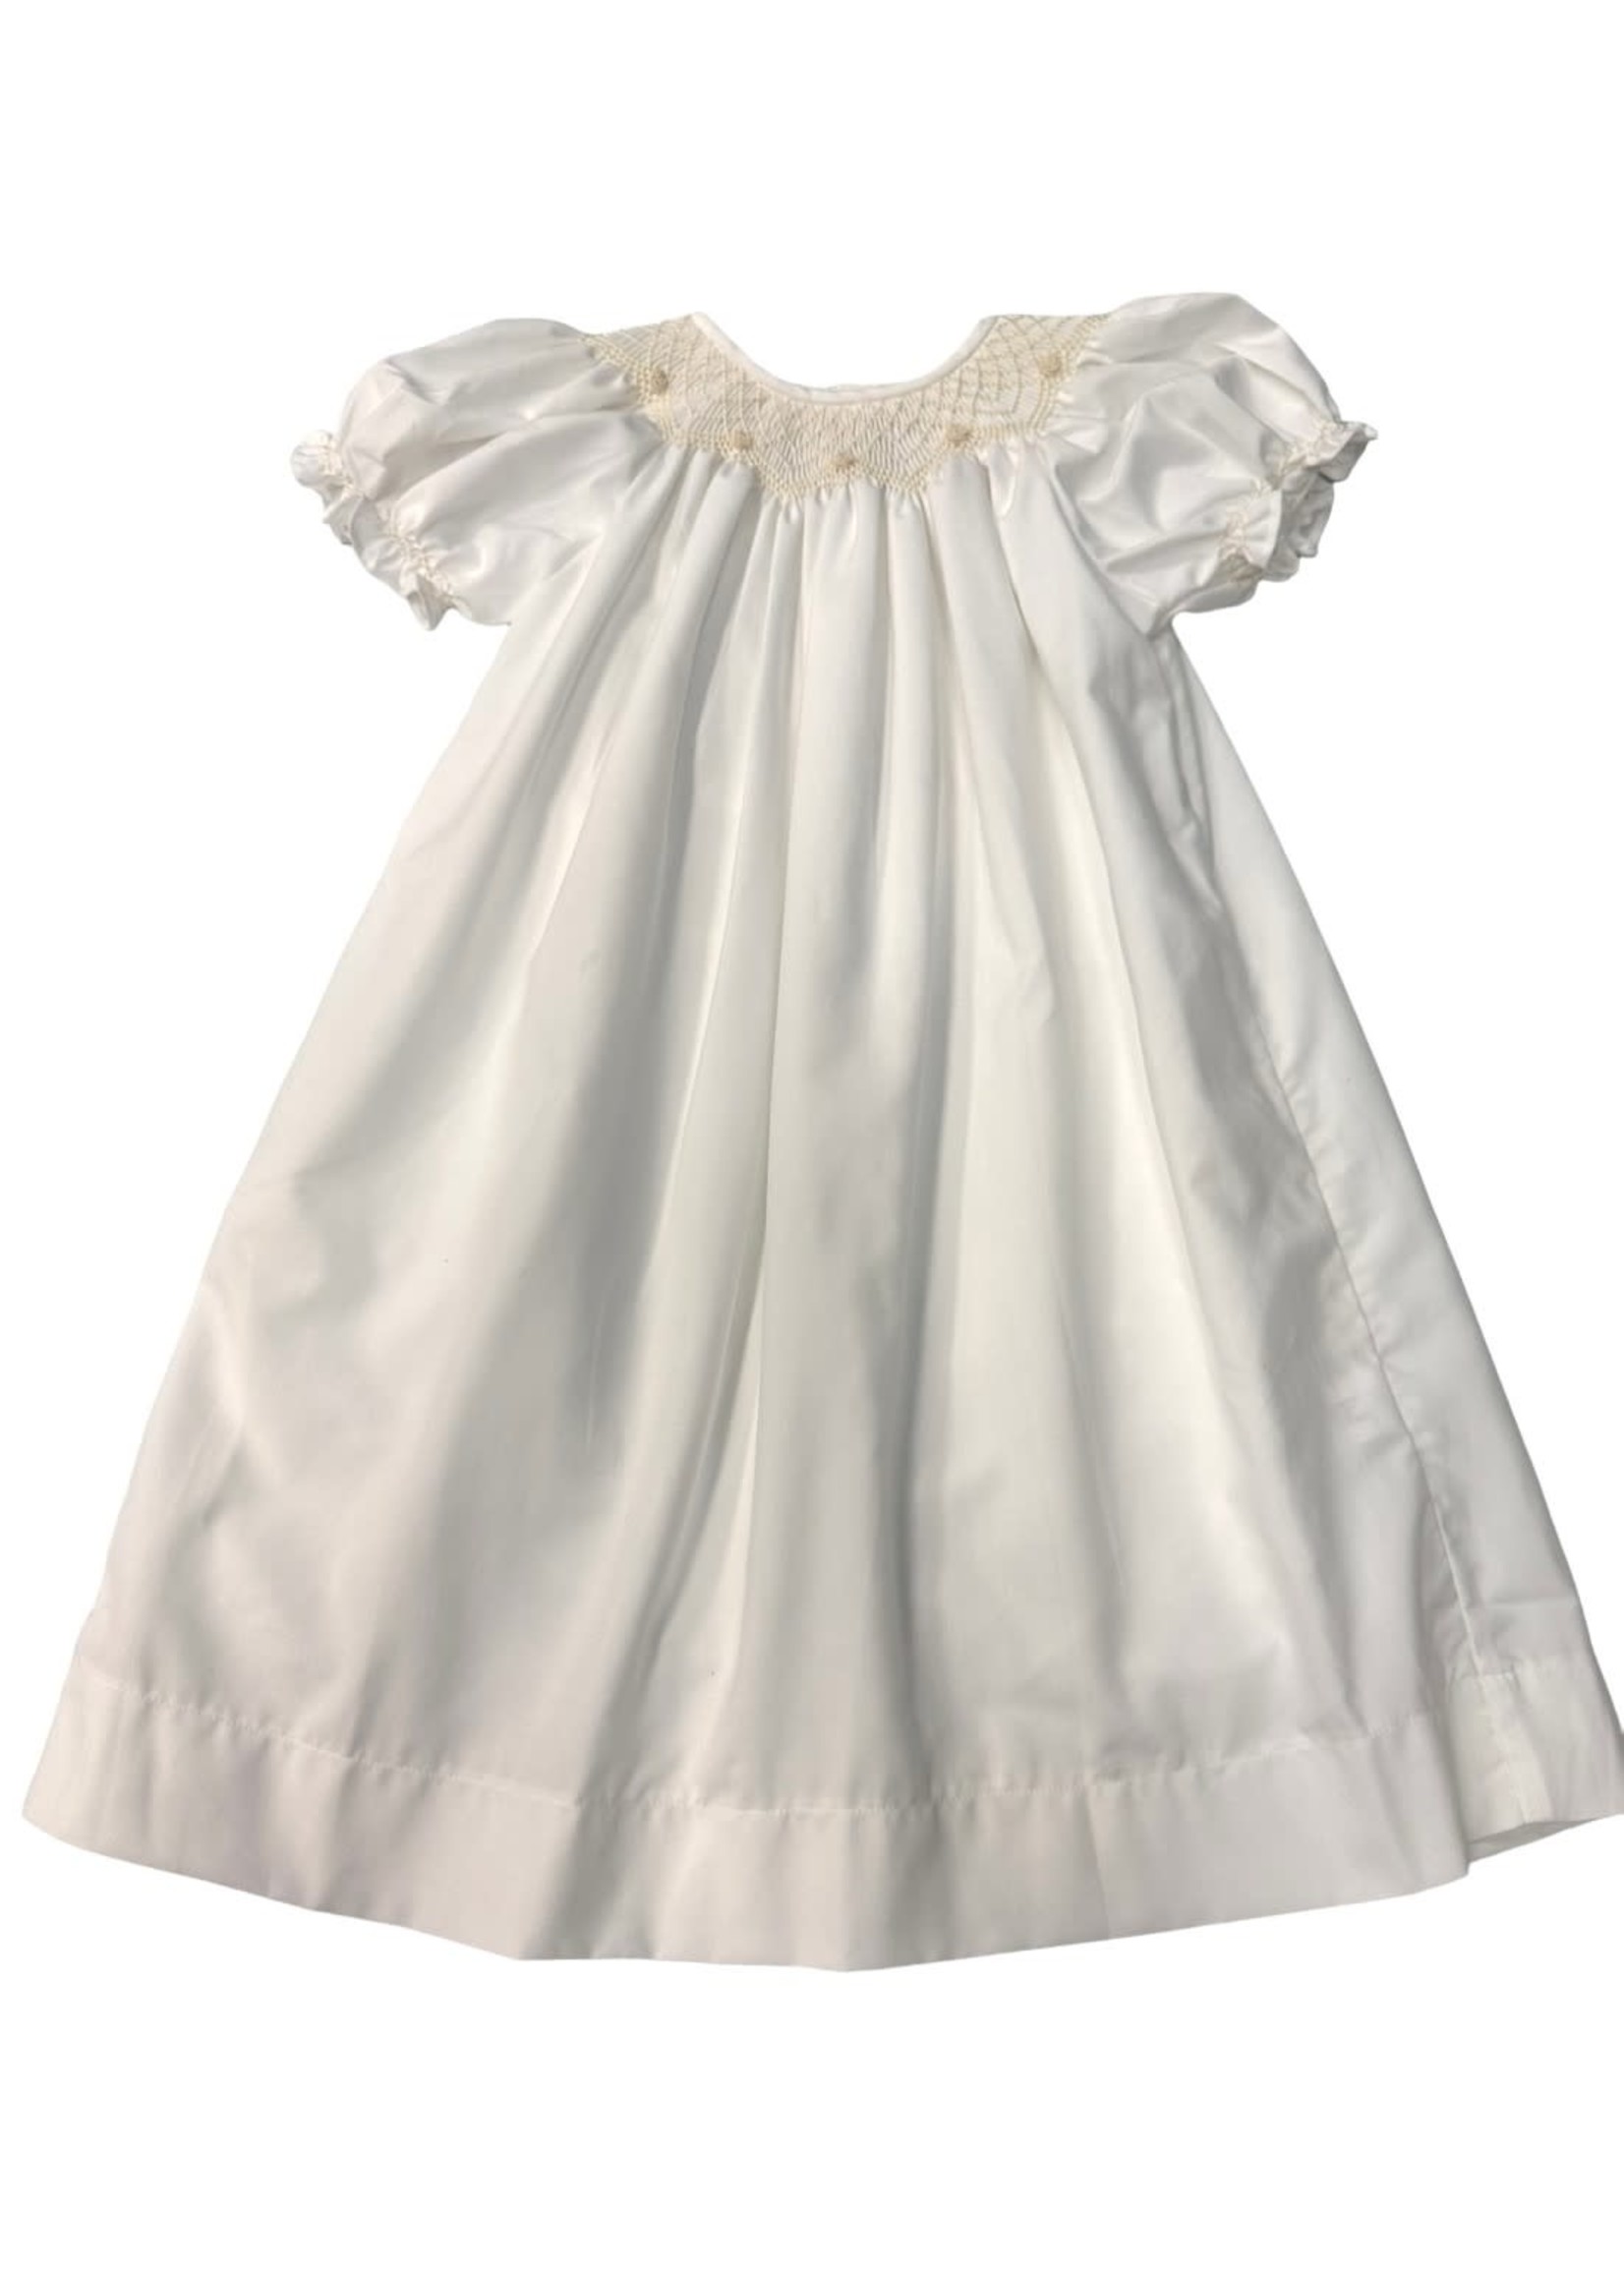 Sweet Dreams Ava White/Beige Smocked Dress